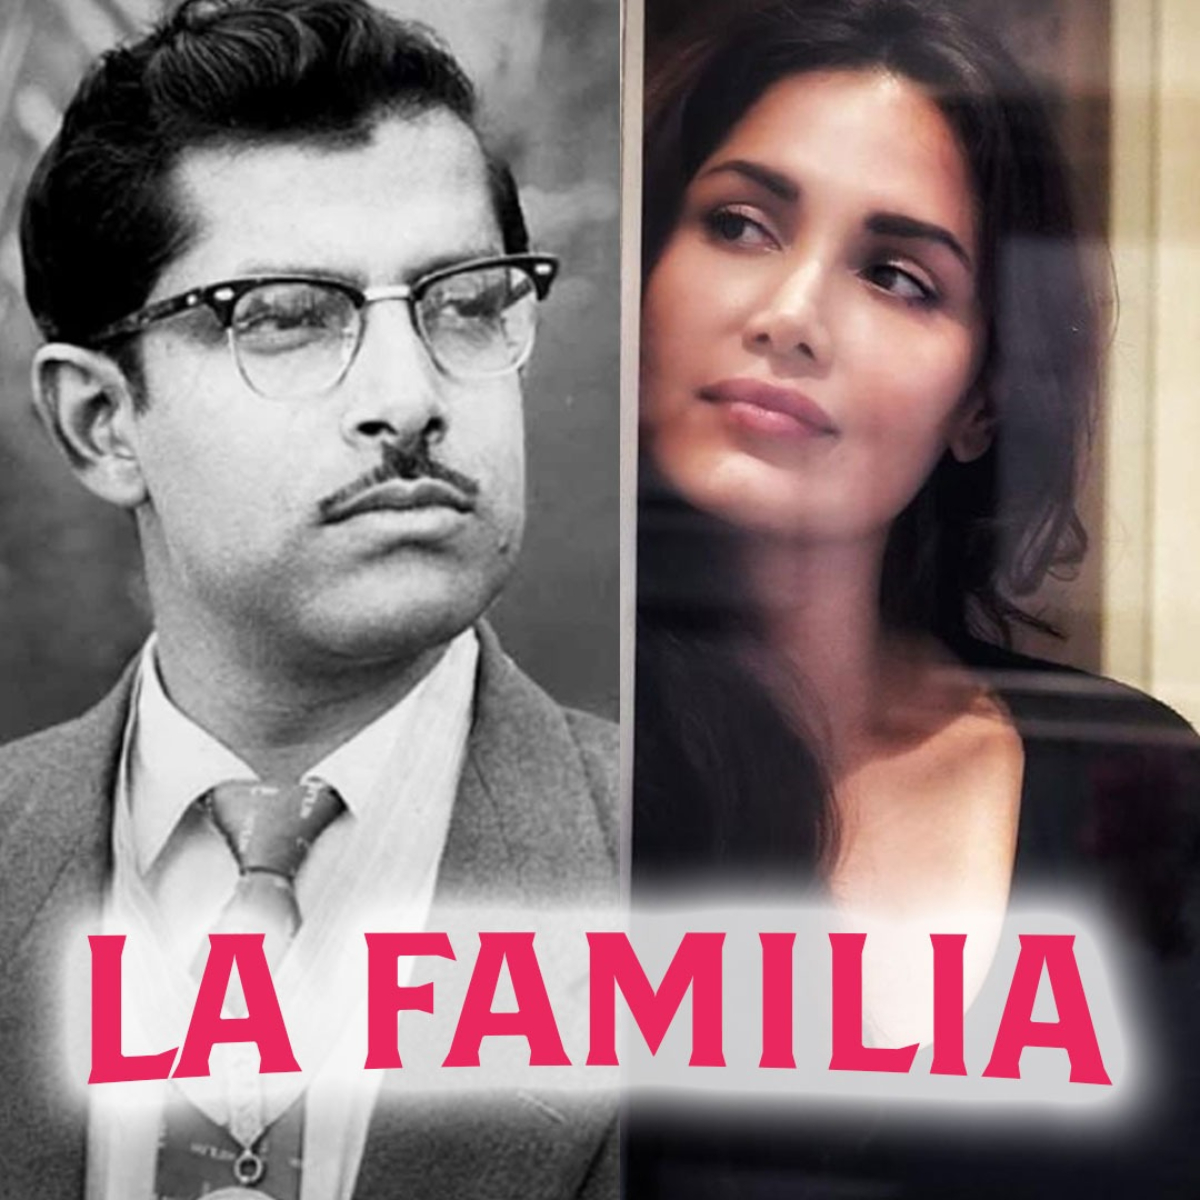 La Familia: Hrishikesh Mukherjee’s granddaughter Tapur recalls he had keen interest in chess and astrology